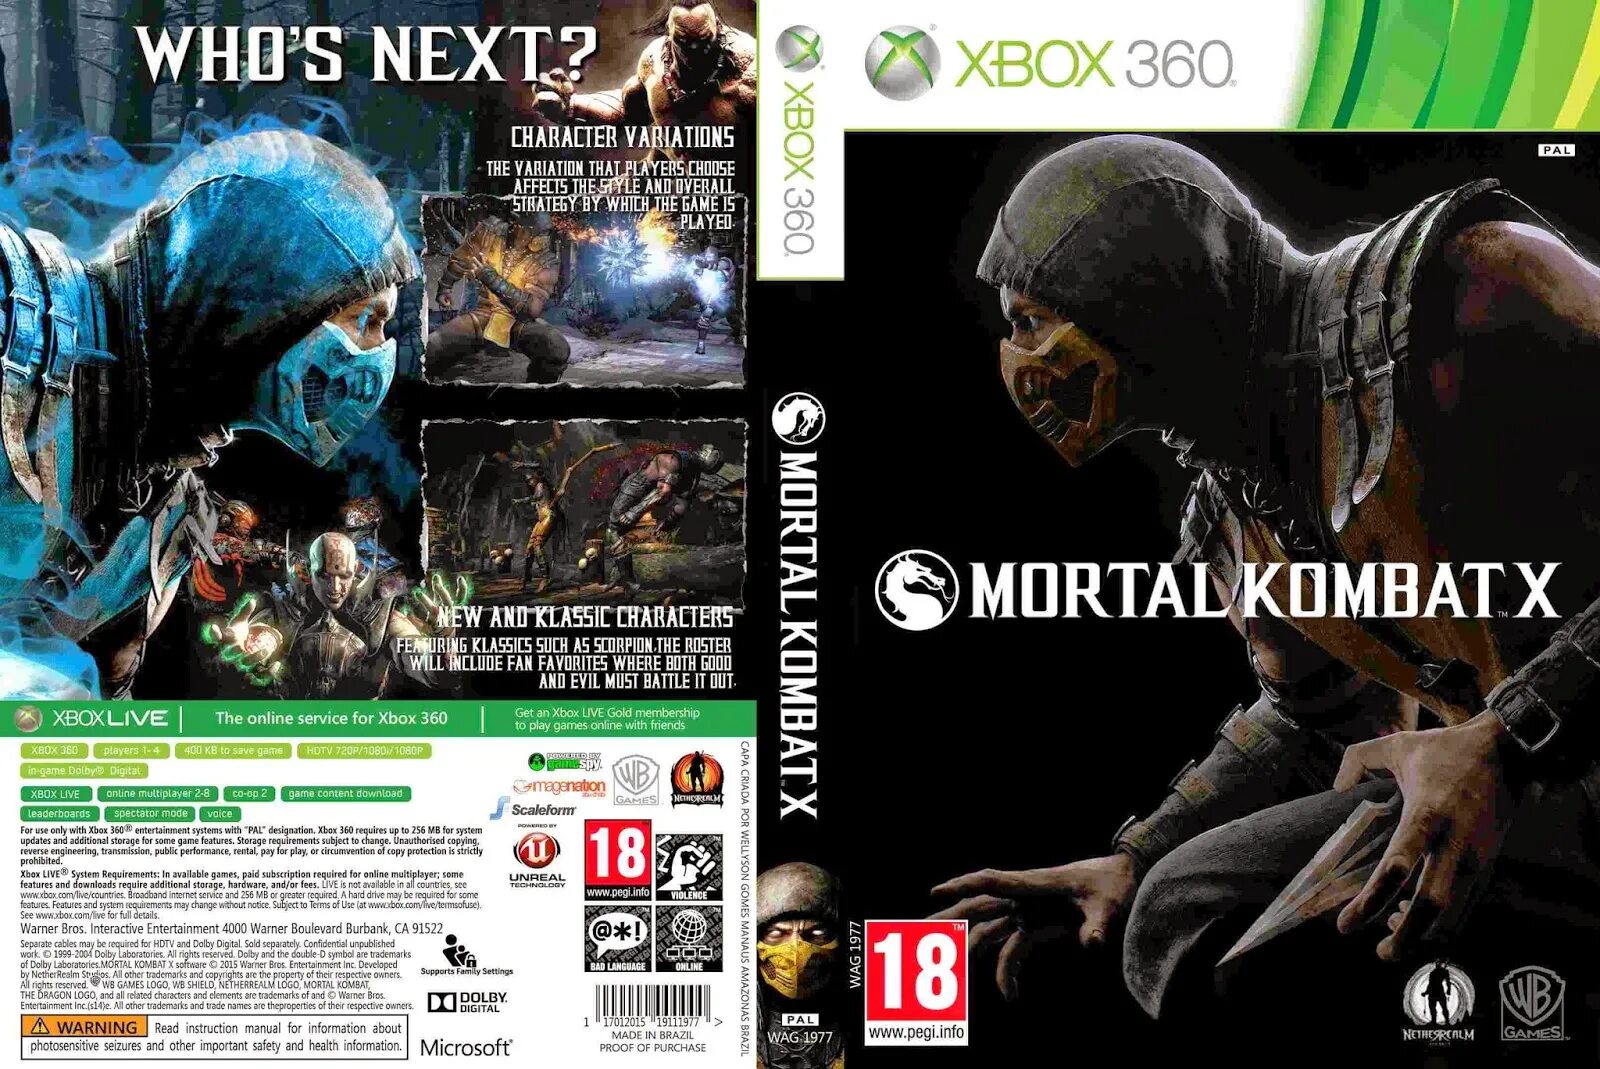 Диск Xbox 360 Mortal Kombat 10. Xbox one Mortal Kombat 10 диск. Диск мортал комбат на Икс бокс 360. Мортал комбат на Xbox 360. Мортал комбат игры xbox